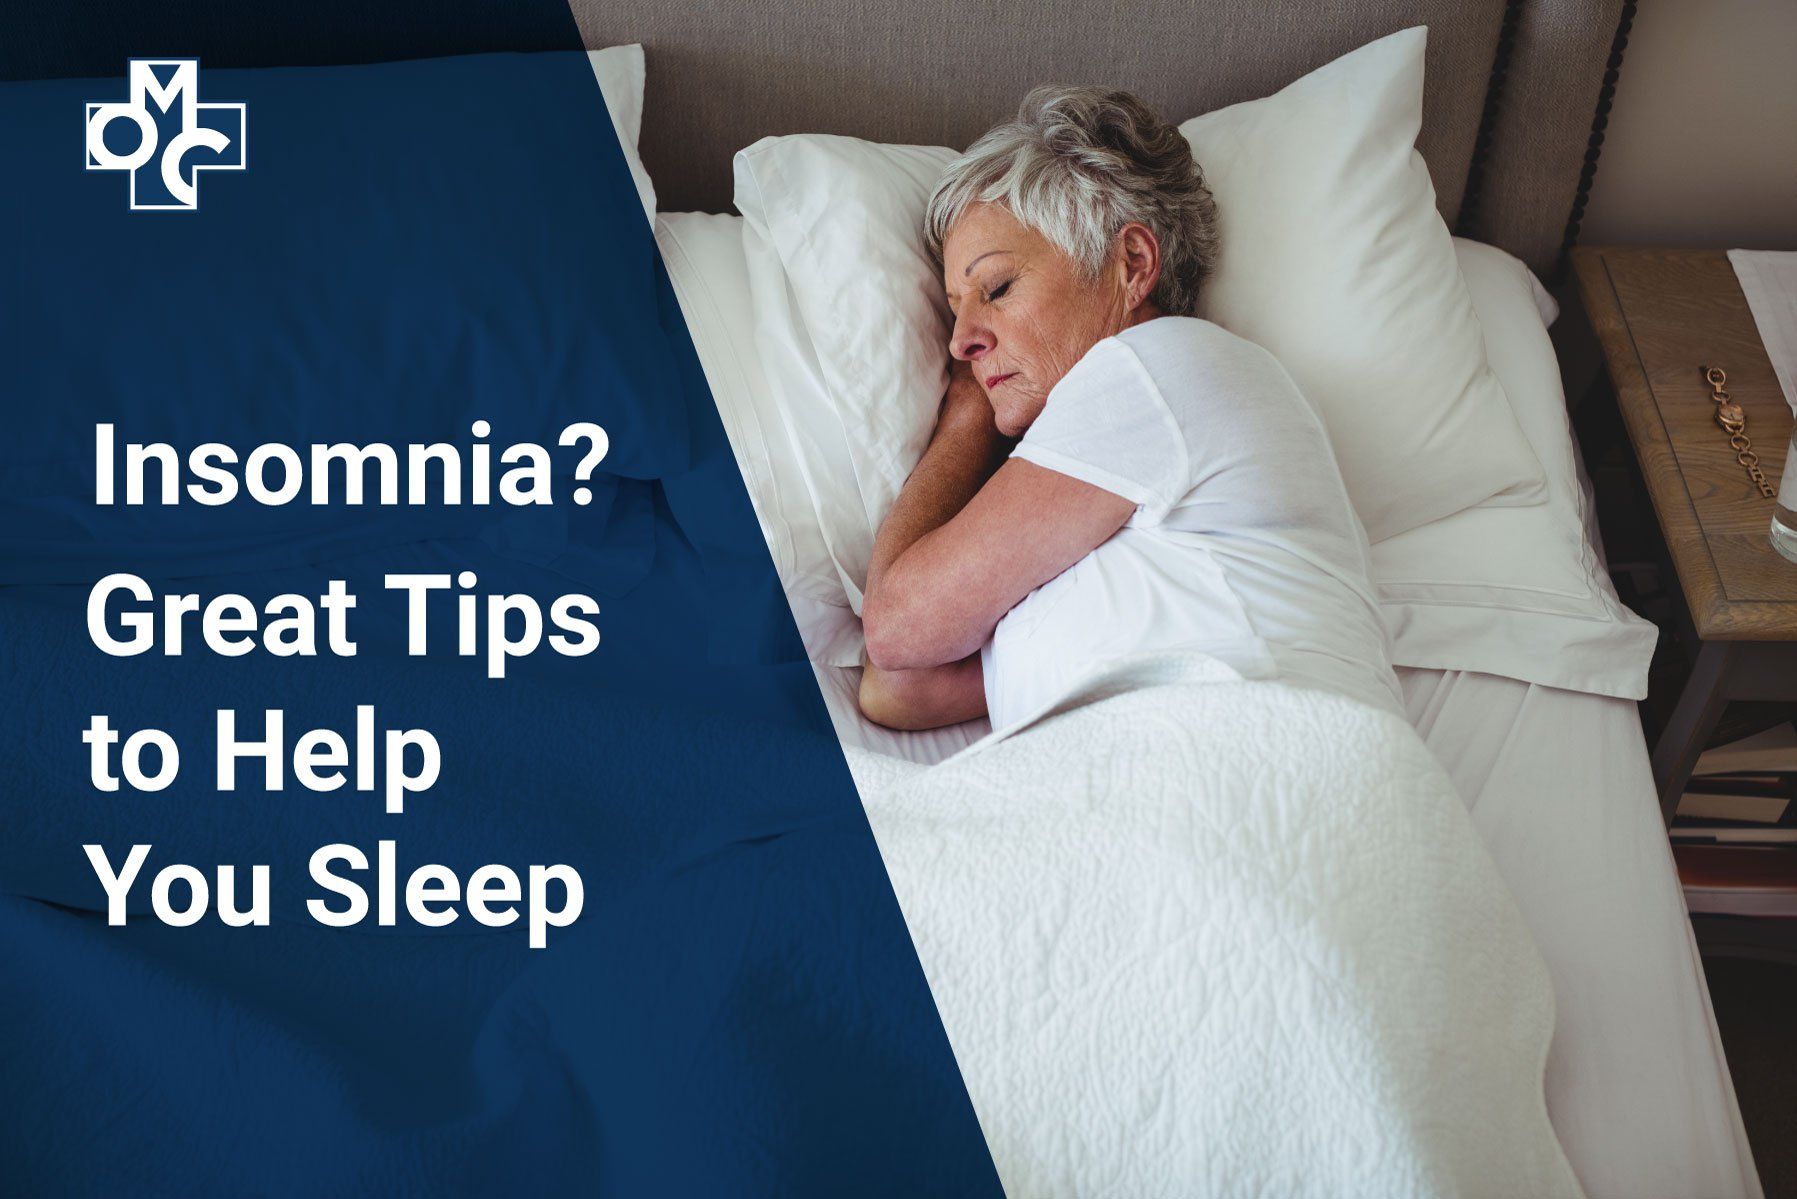 Insomnia? Great Tips to Help You Sleep